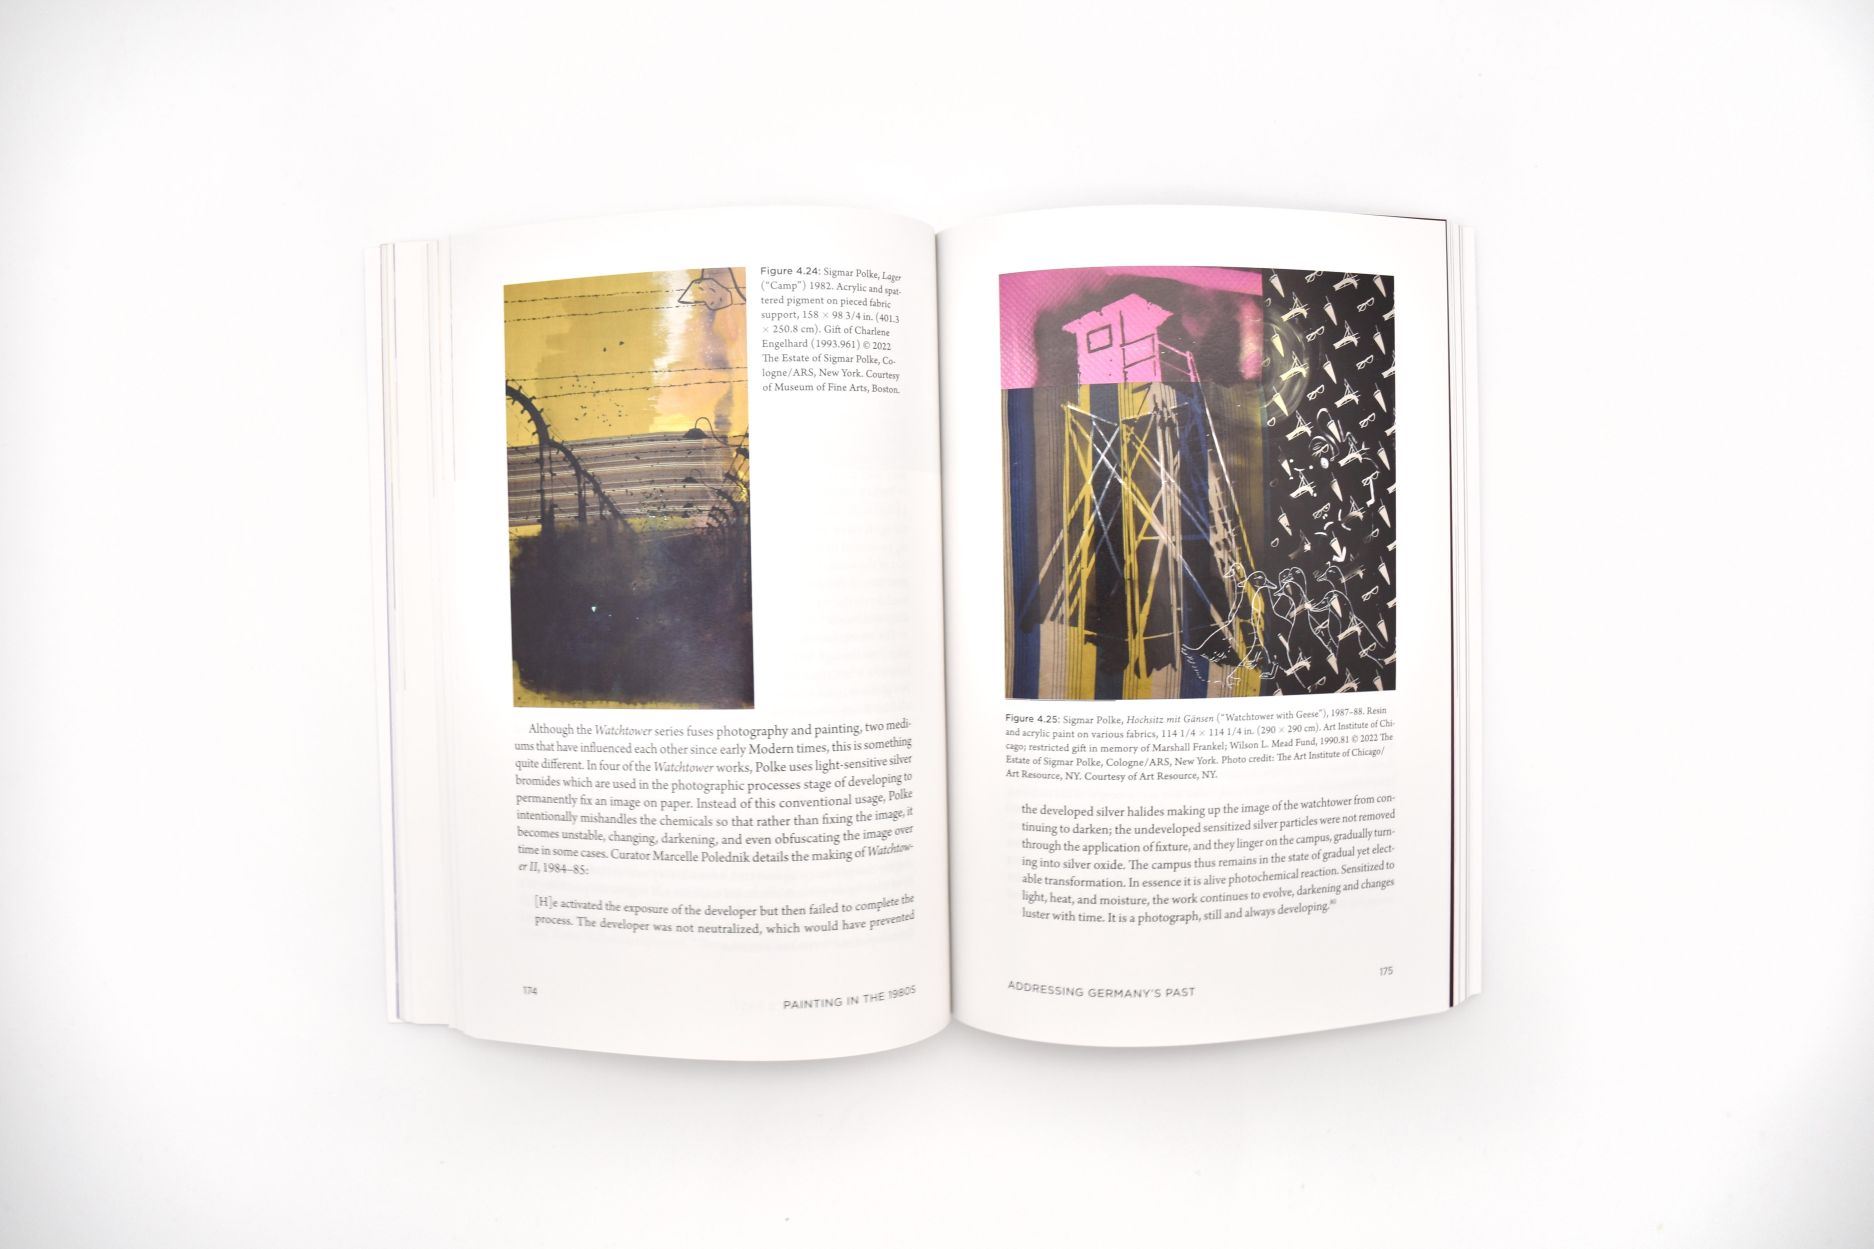 The Art Book by Phaidon Press